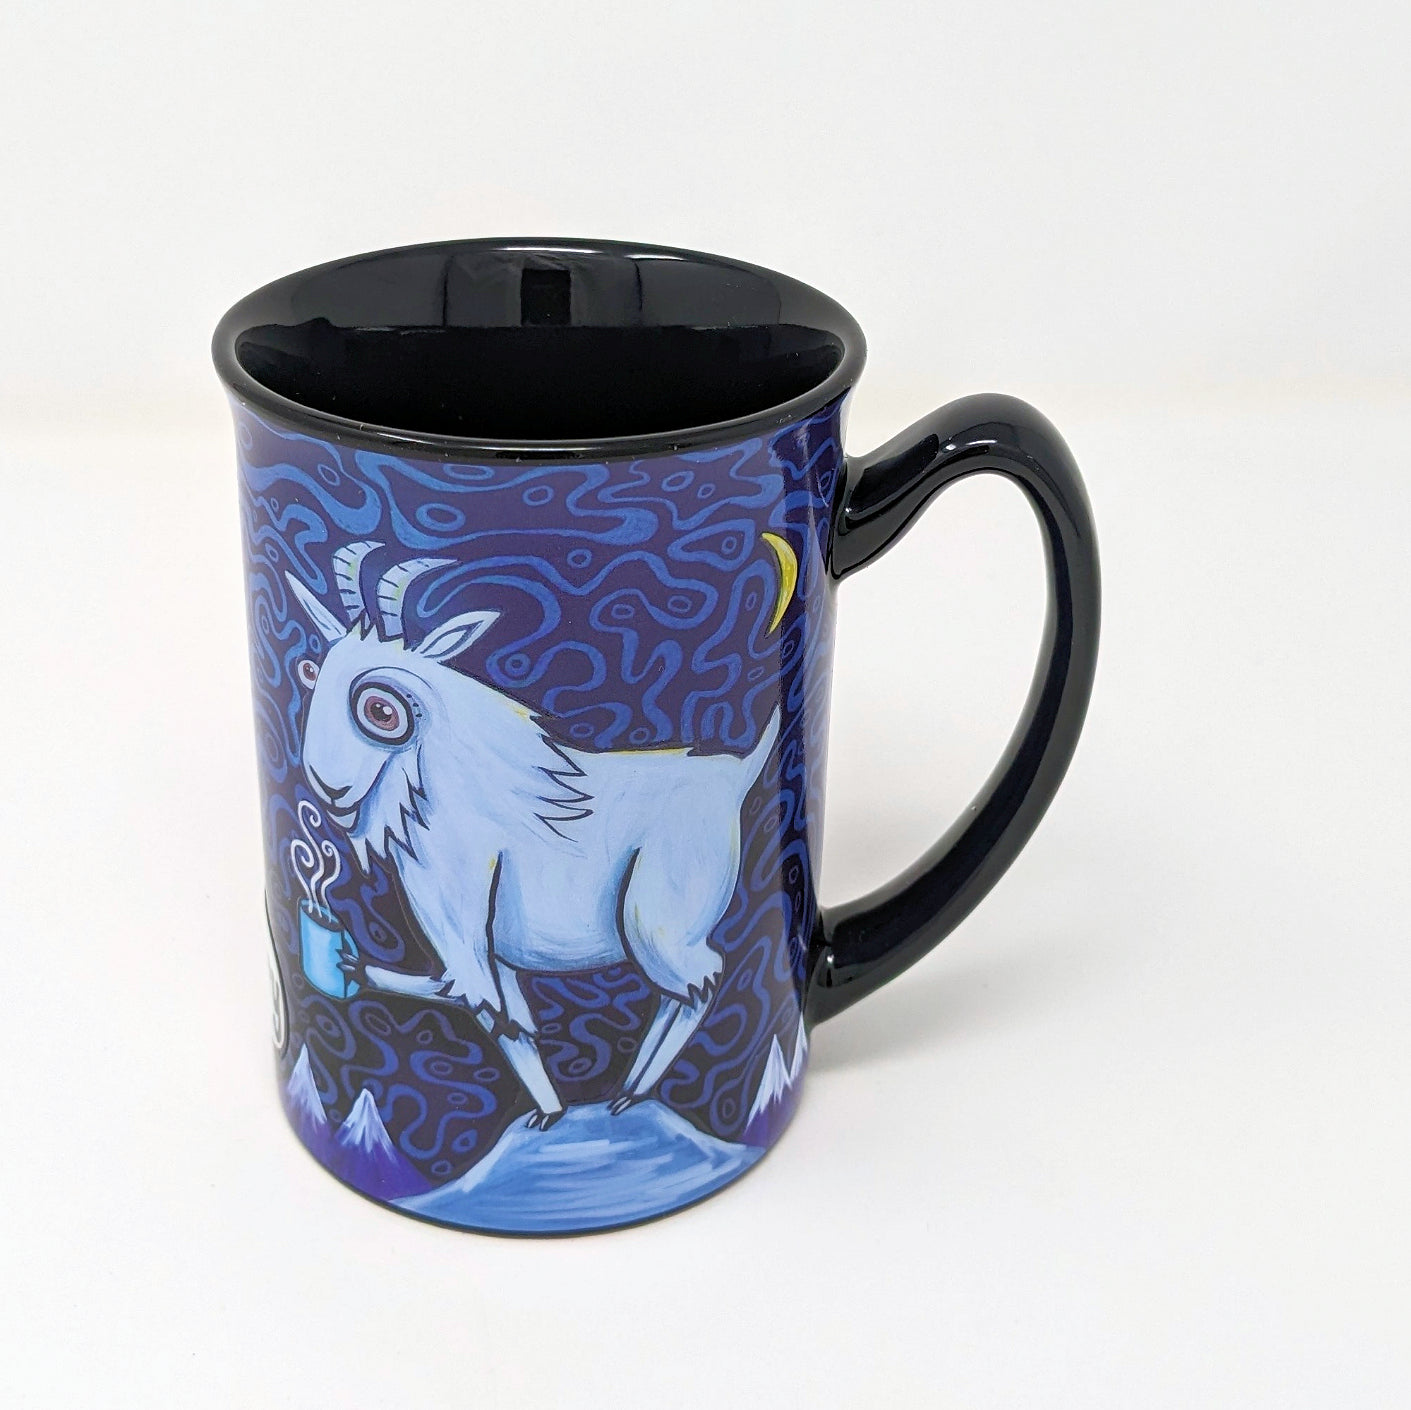 Mountain Goat with Coffee - 15 oz. Ceramic Mug